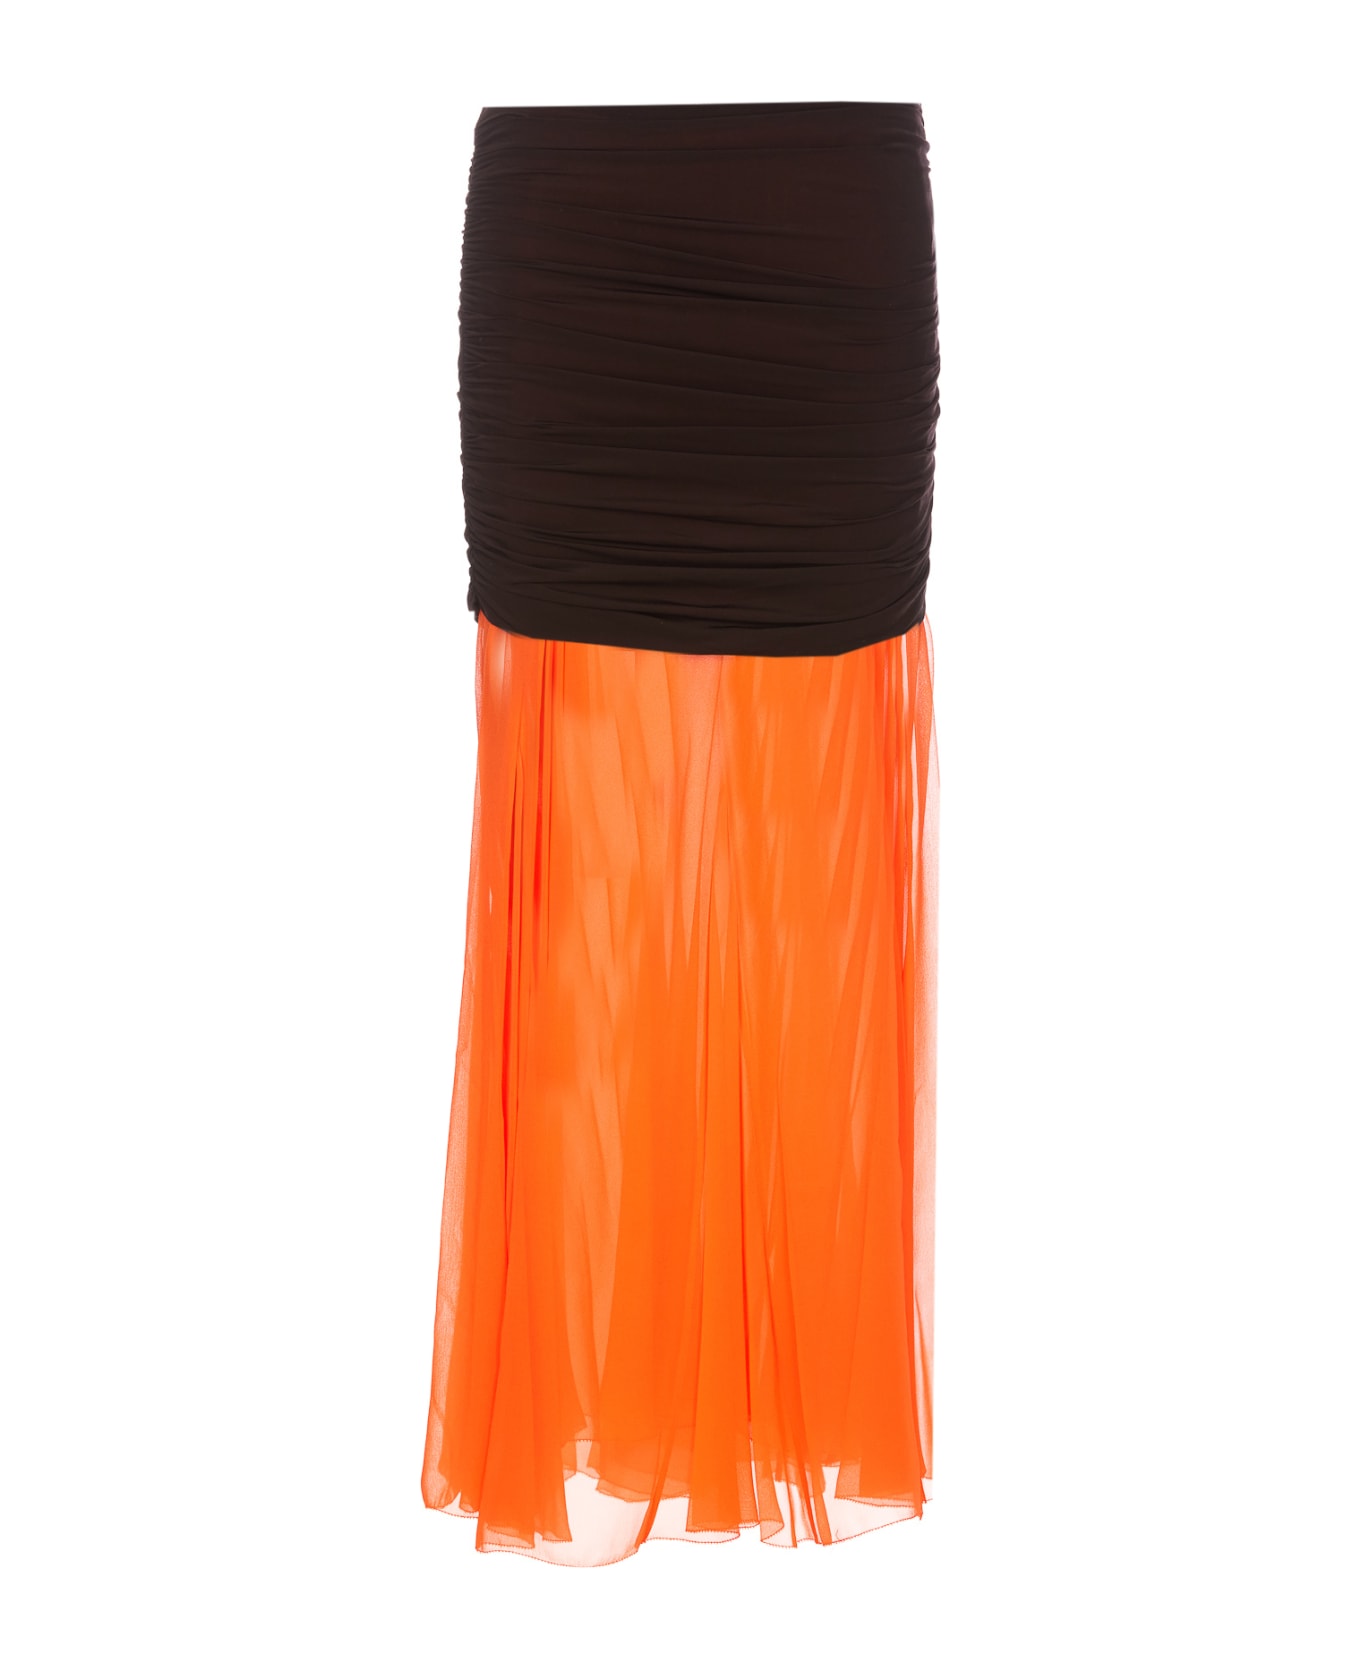 Tory Burch Long Skirt - Orange スカート